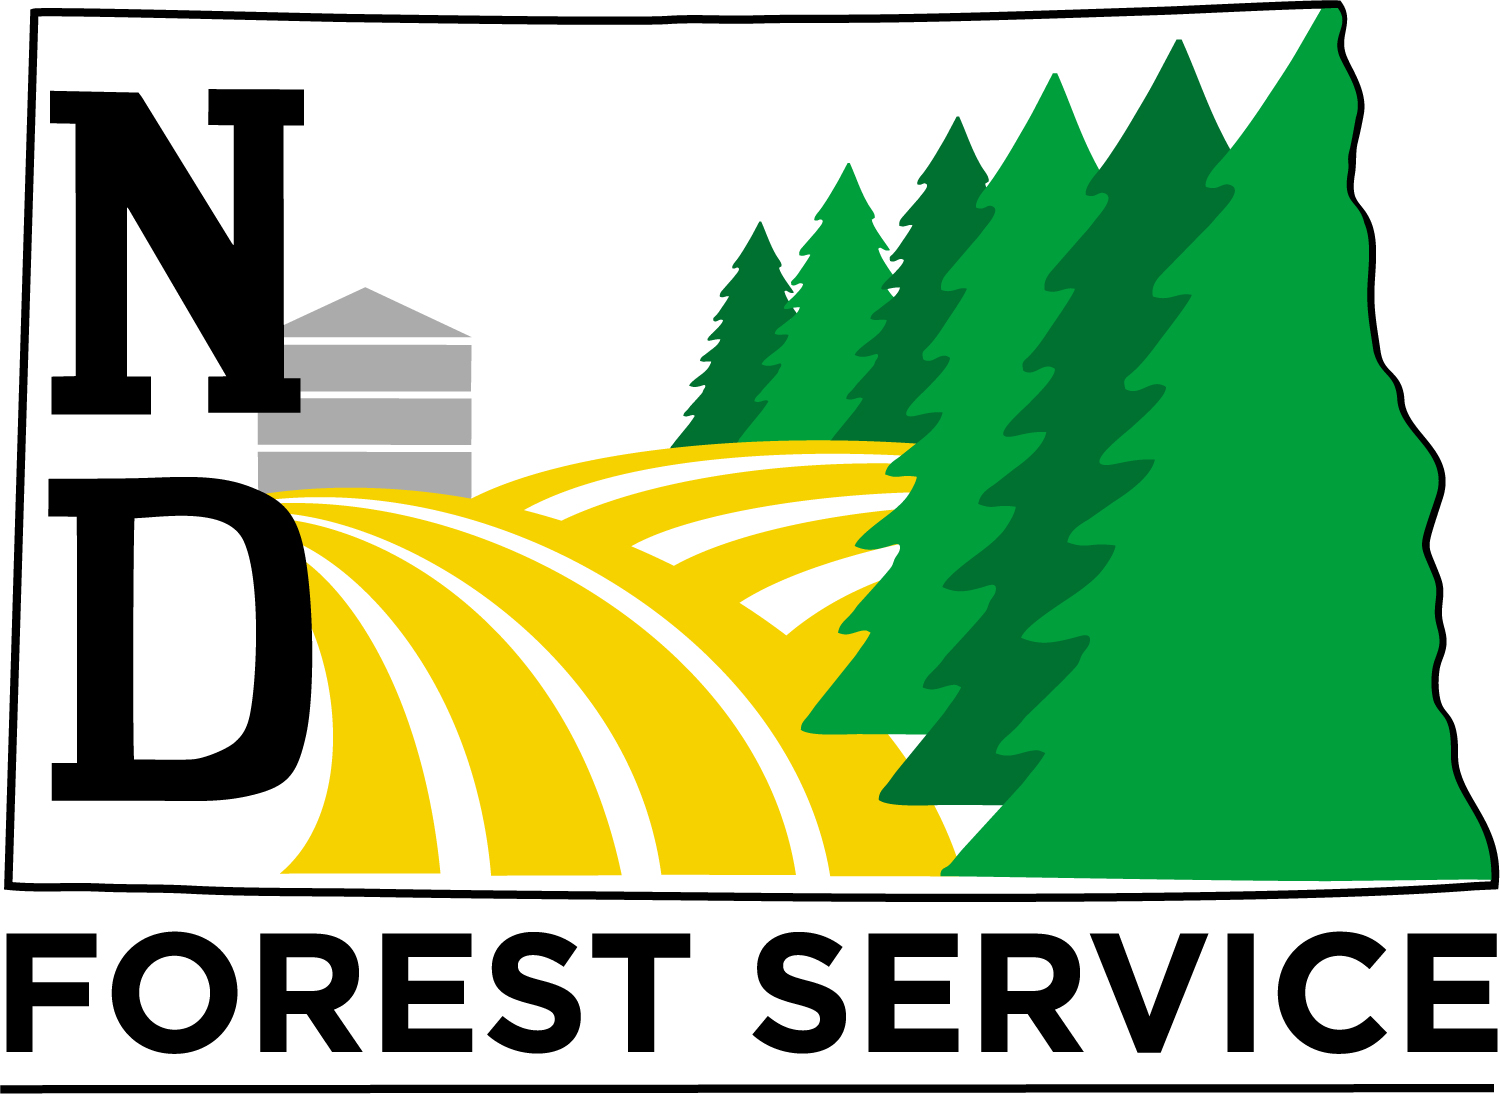 ND Forest Service 2021 logo